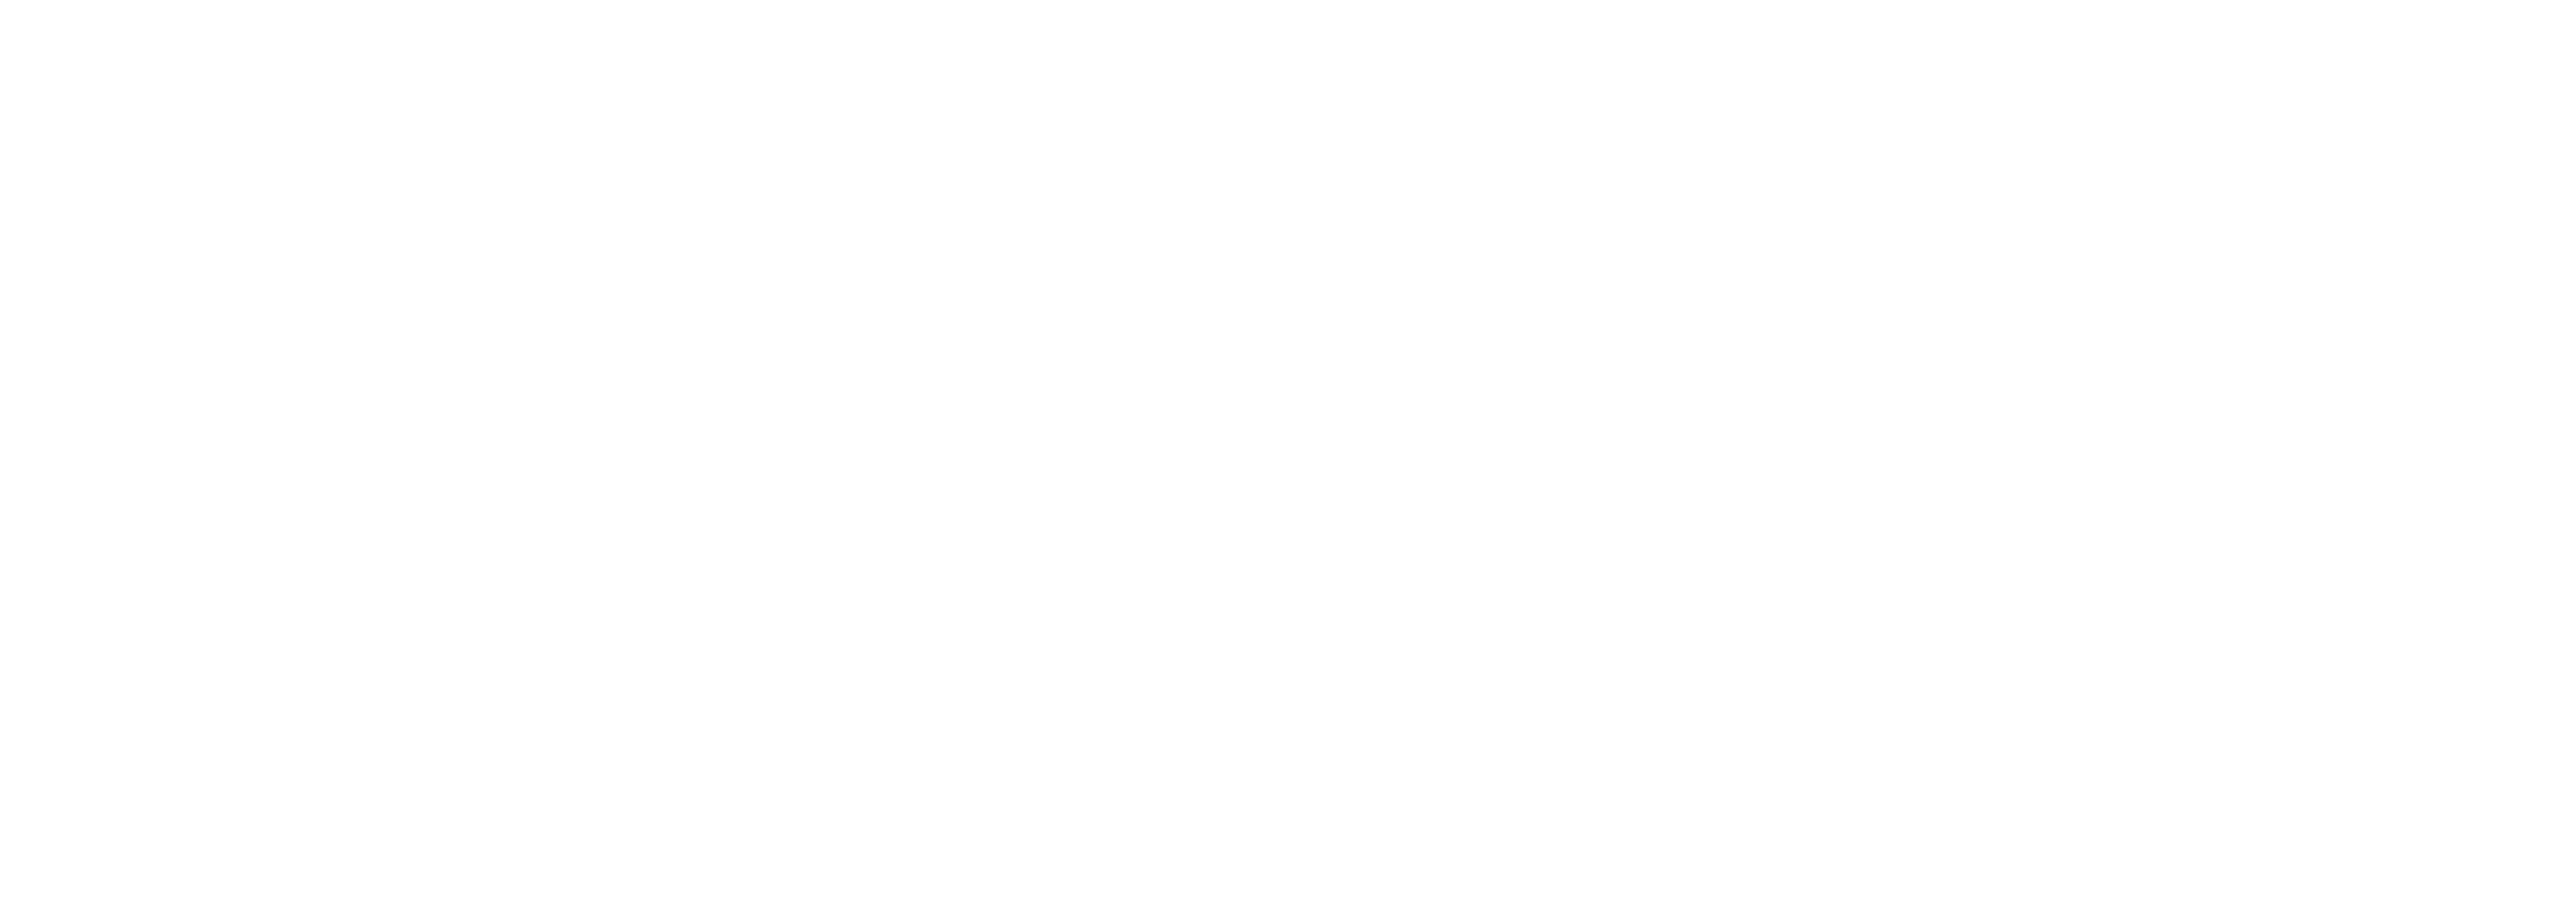 Mountain Generators